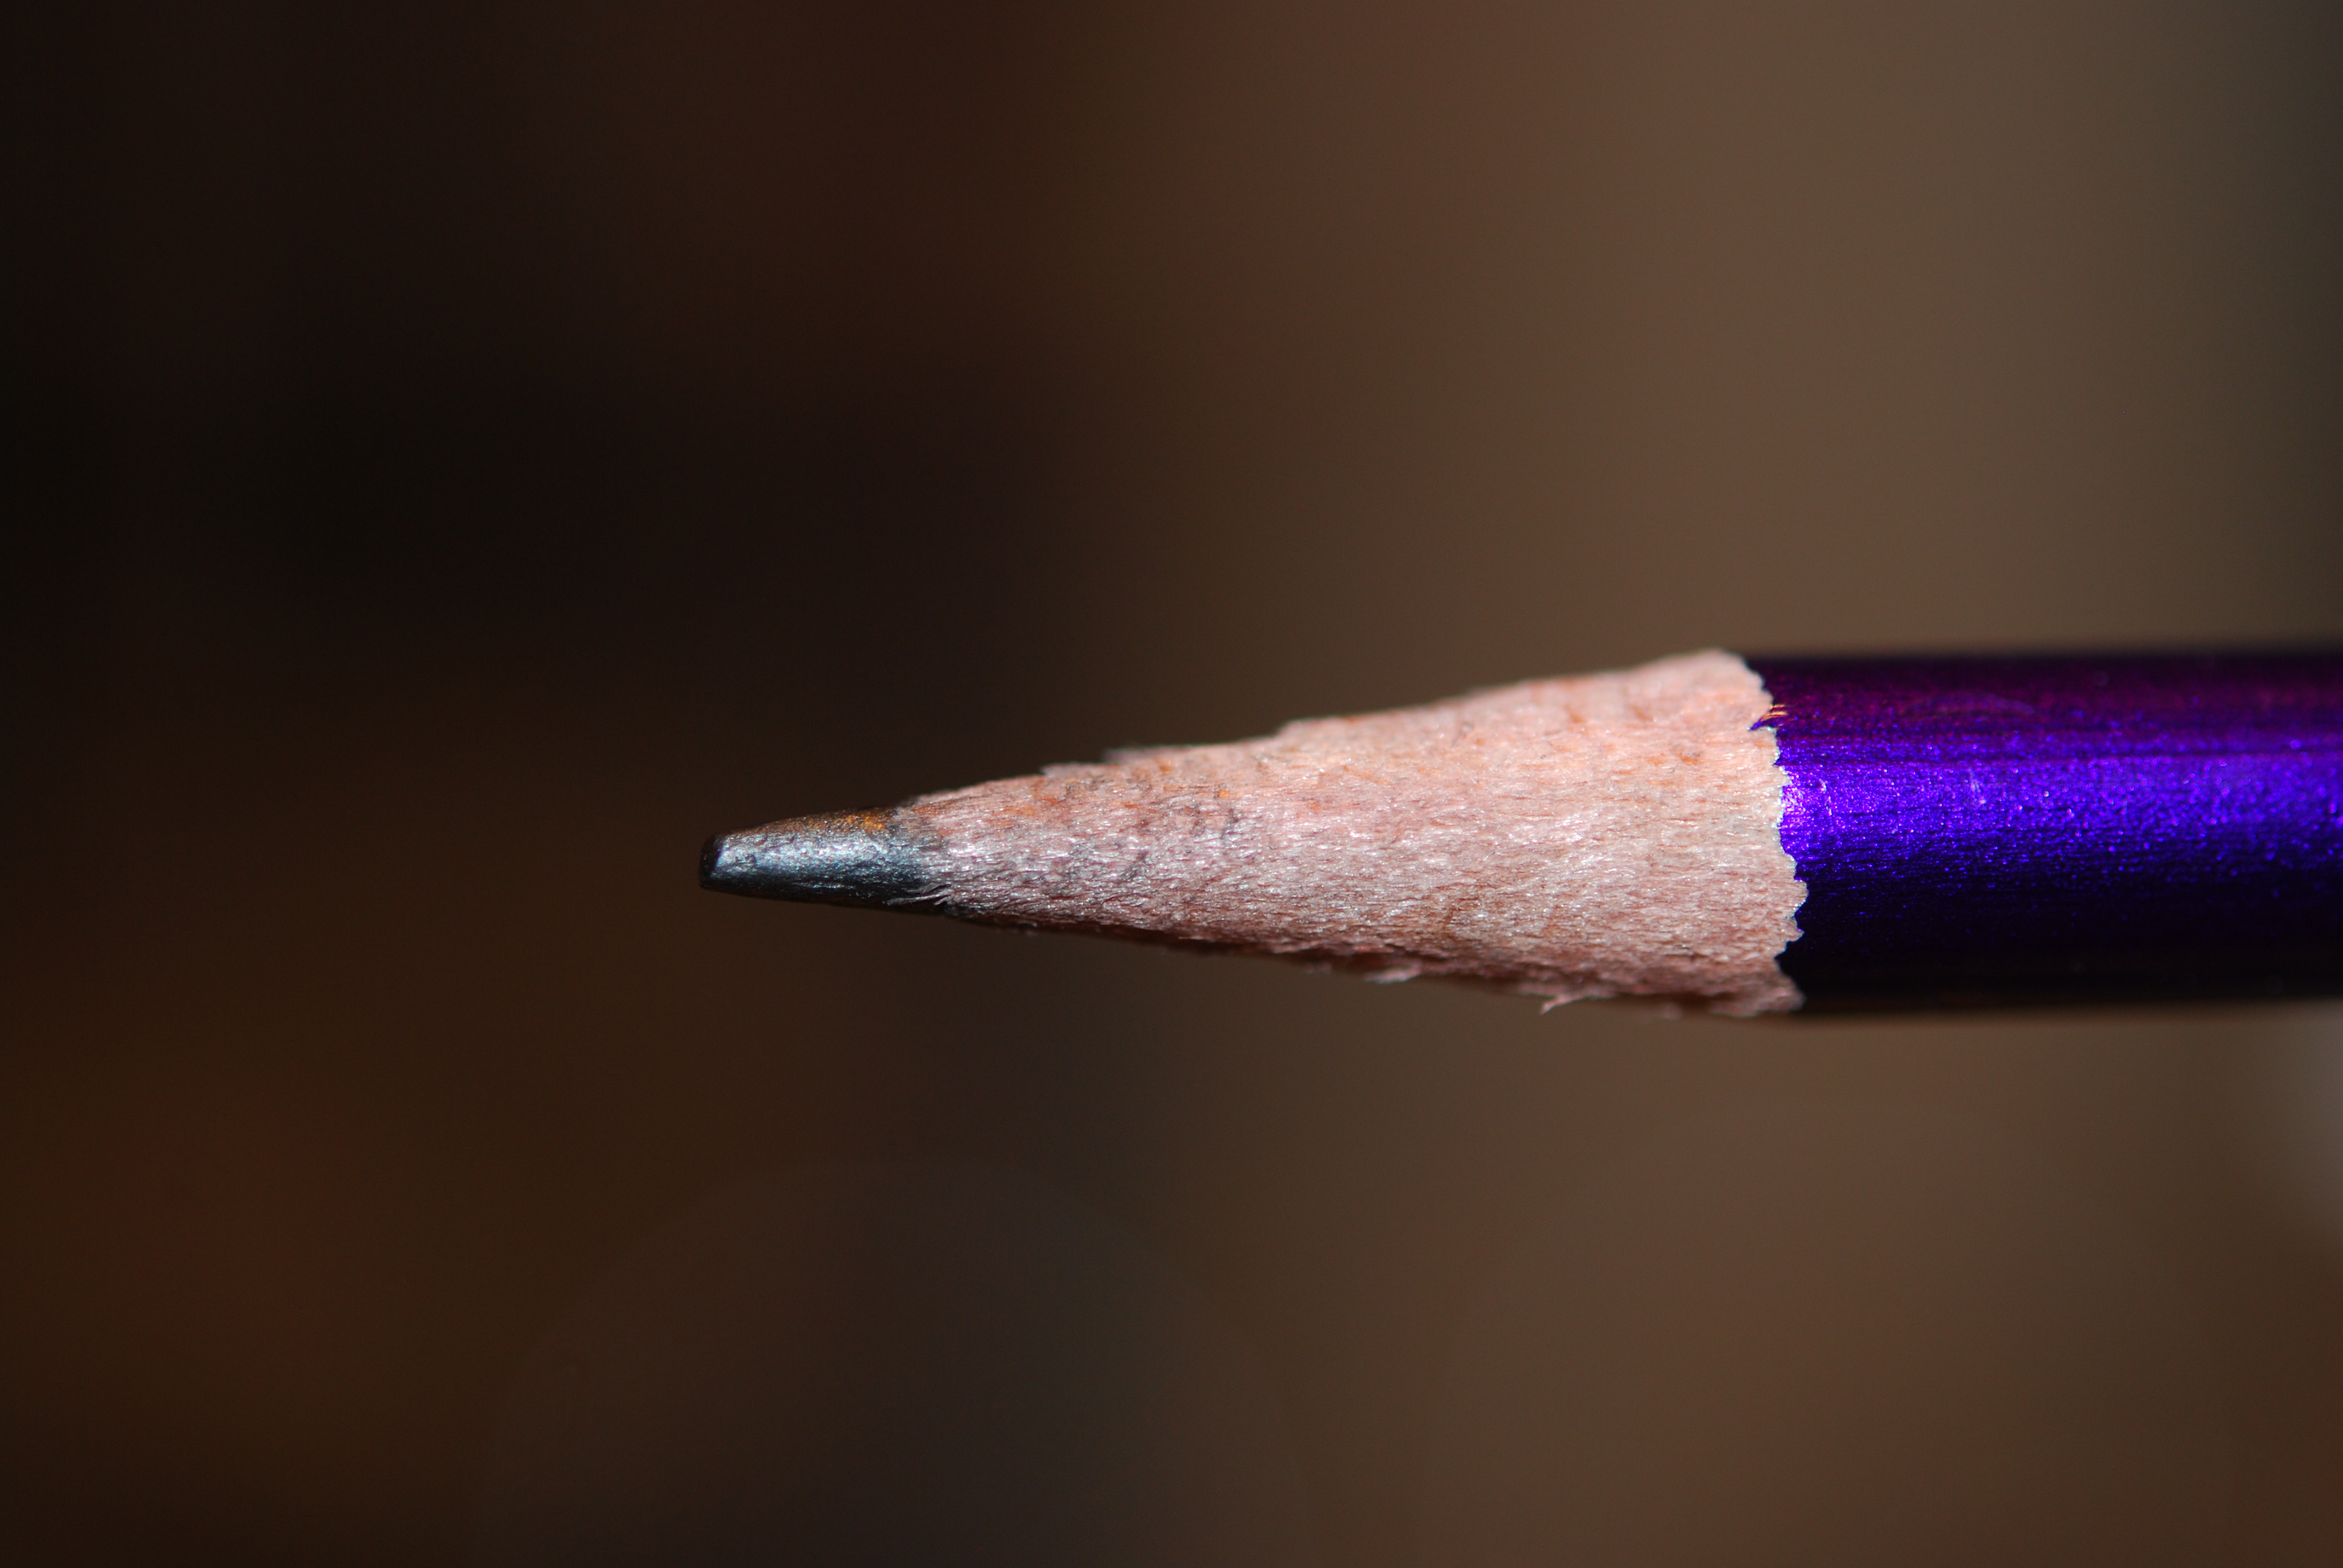 File:Pencil tip closeup.JPG - Wikimedia Commons